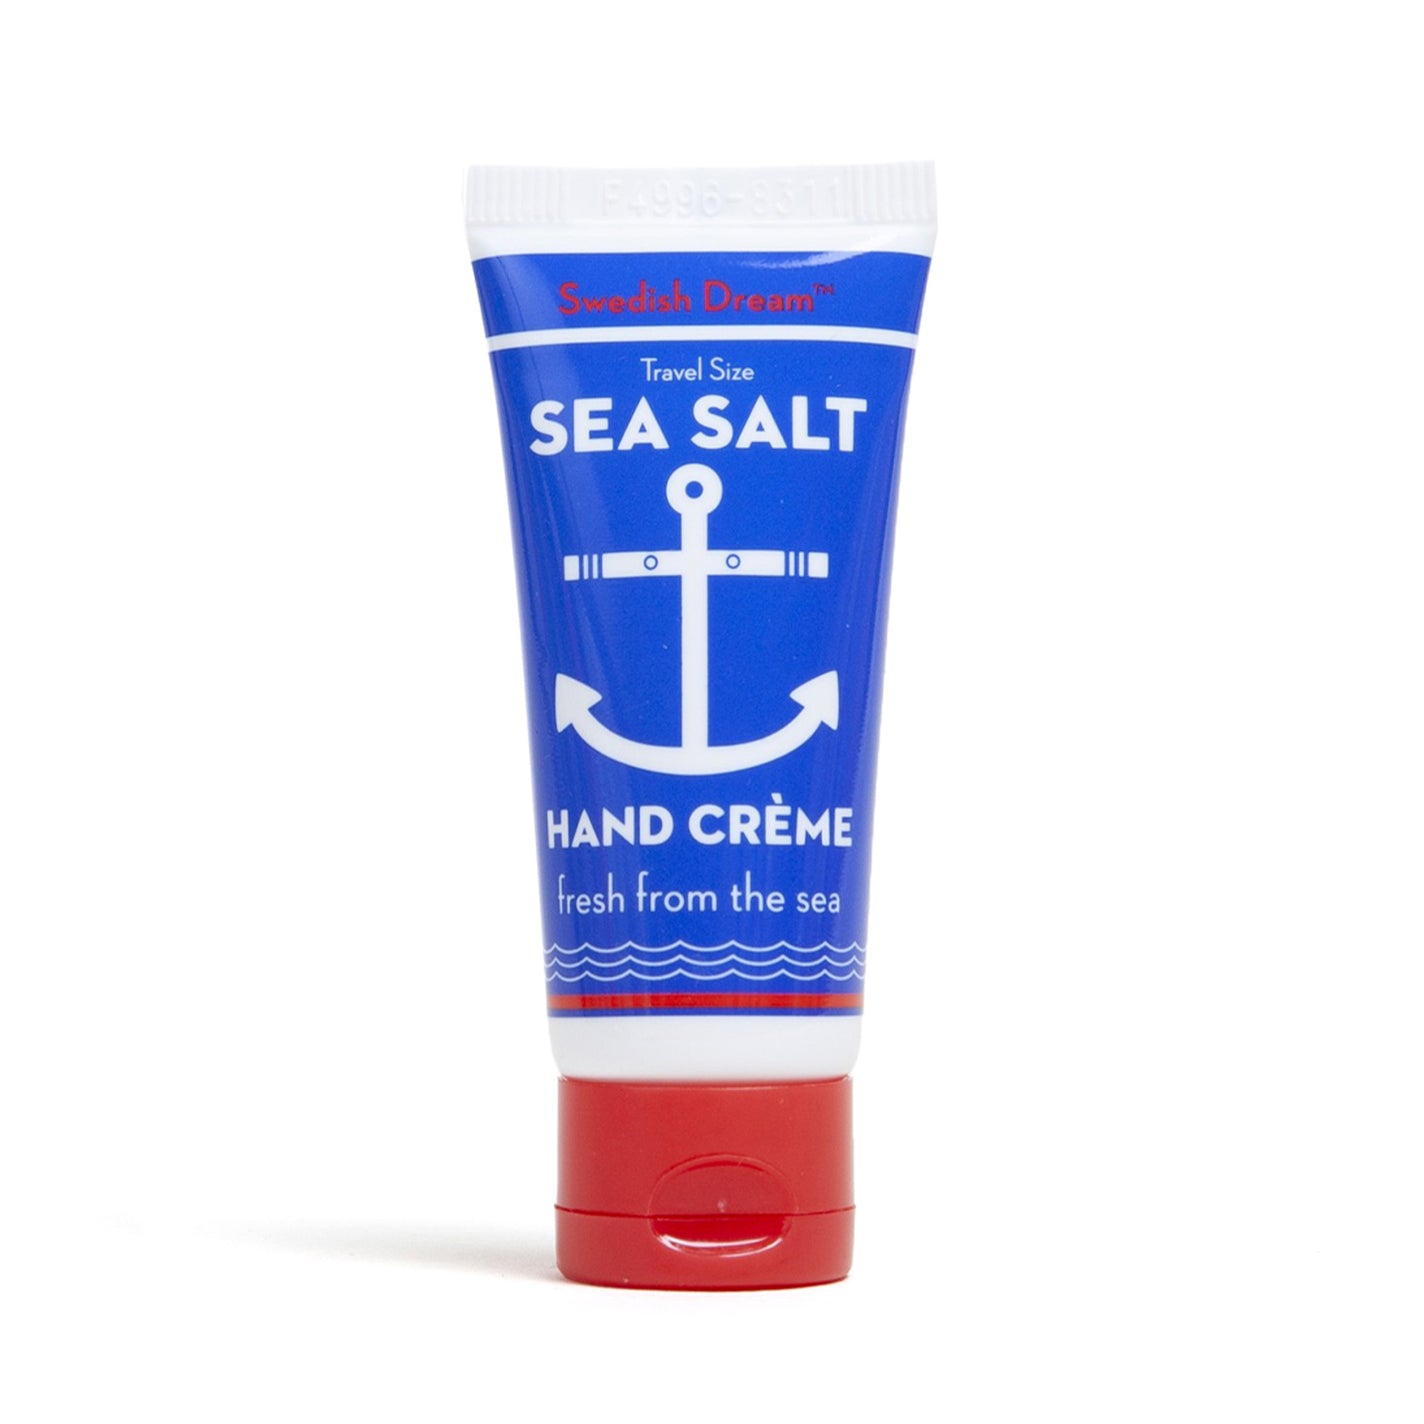 Kalastyle Sea Salt Travel Hand Creme